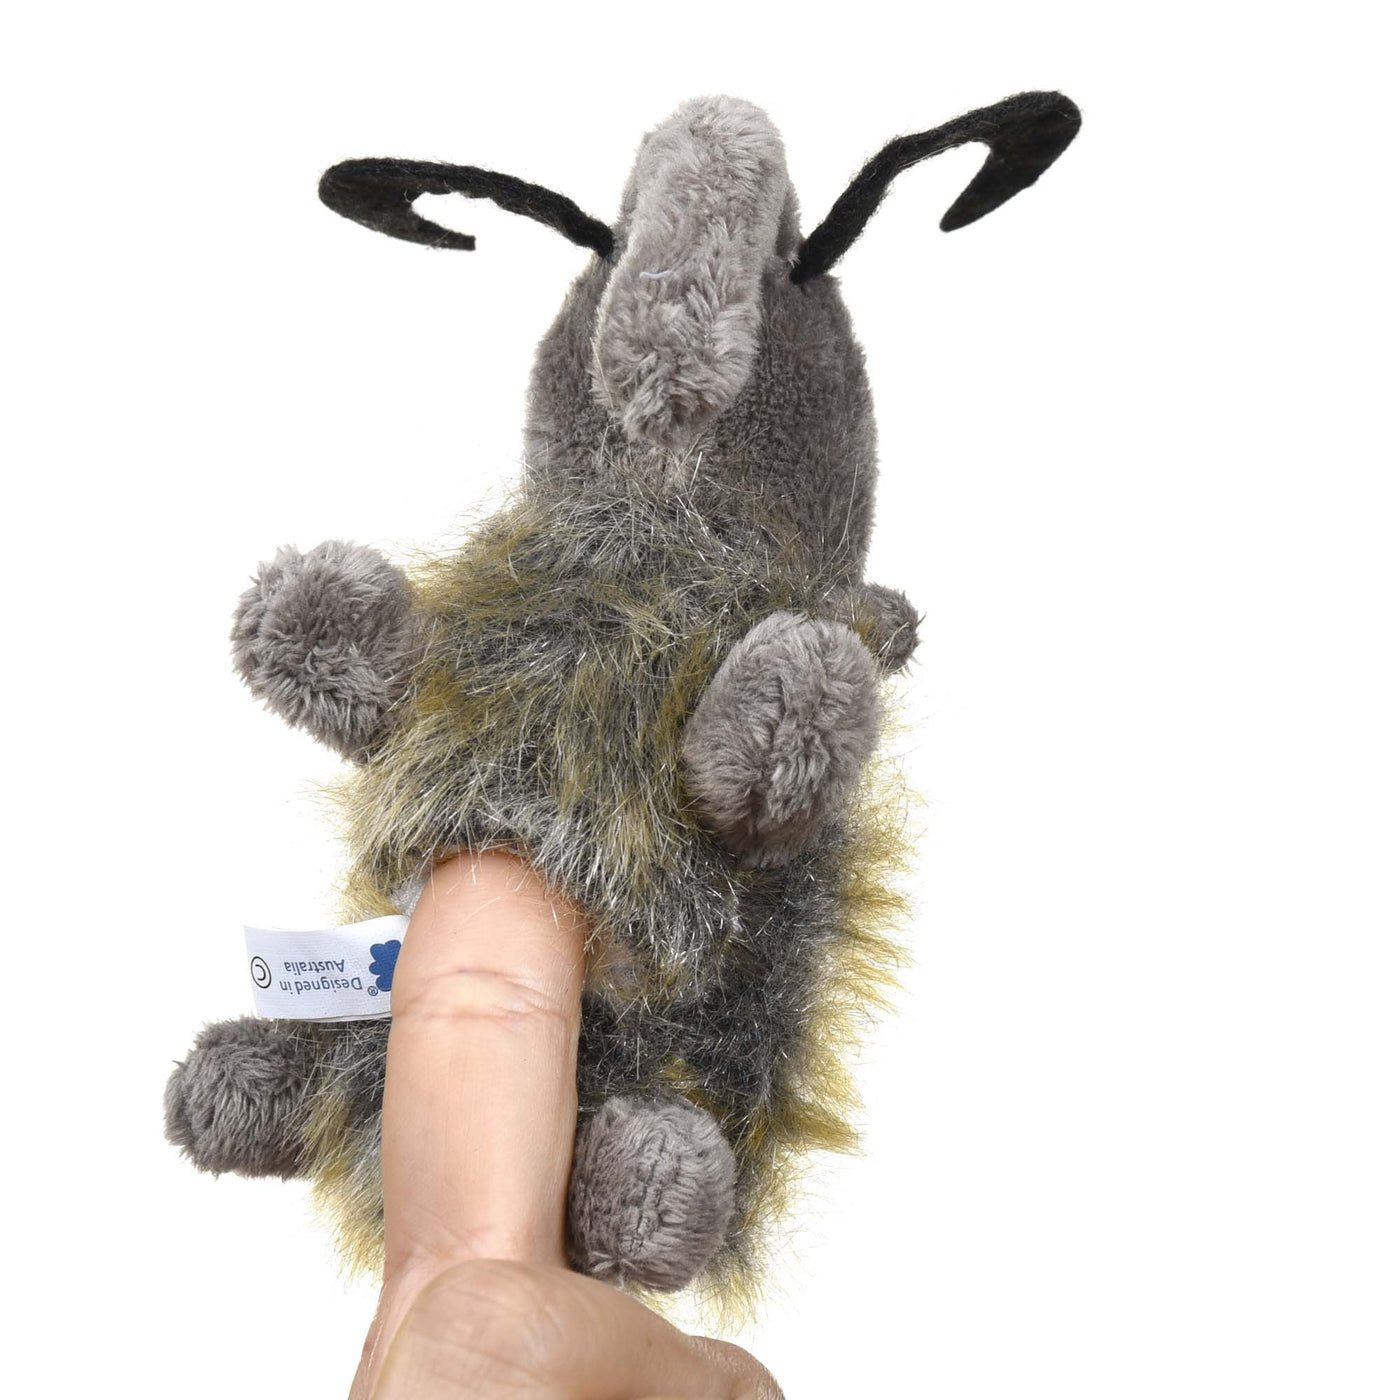 Woli, Woolly Mammoth Finger Puppet